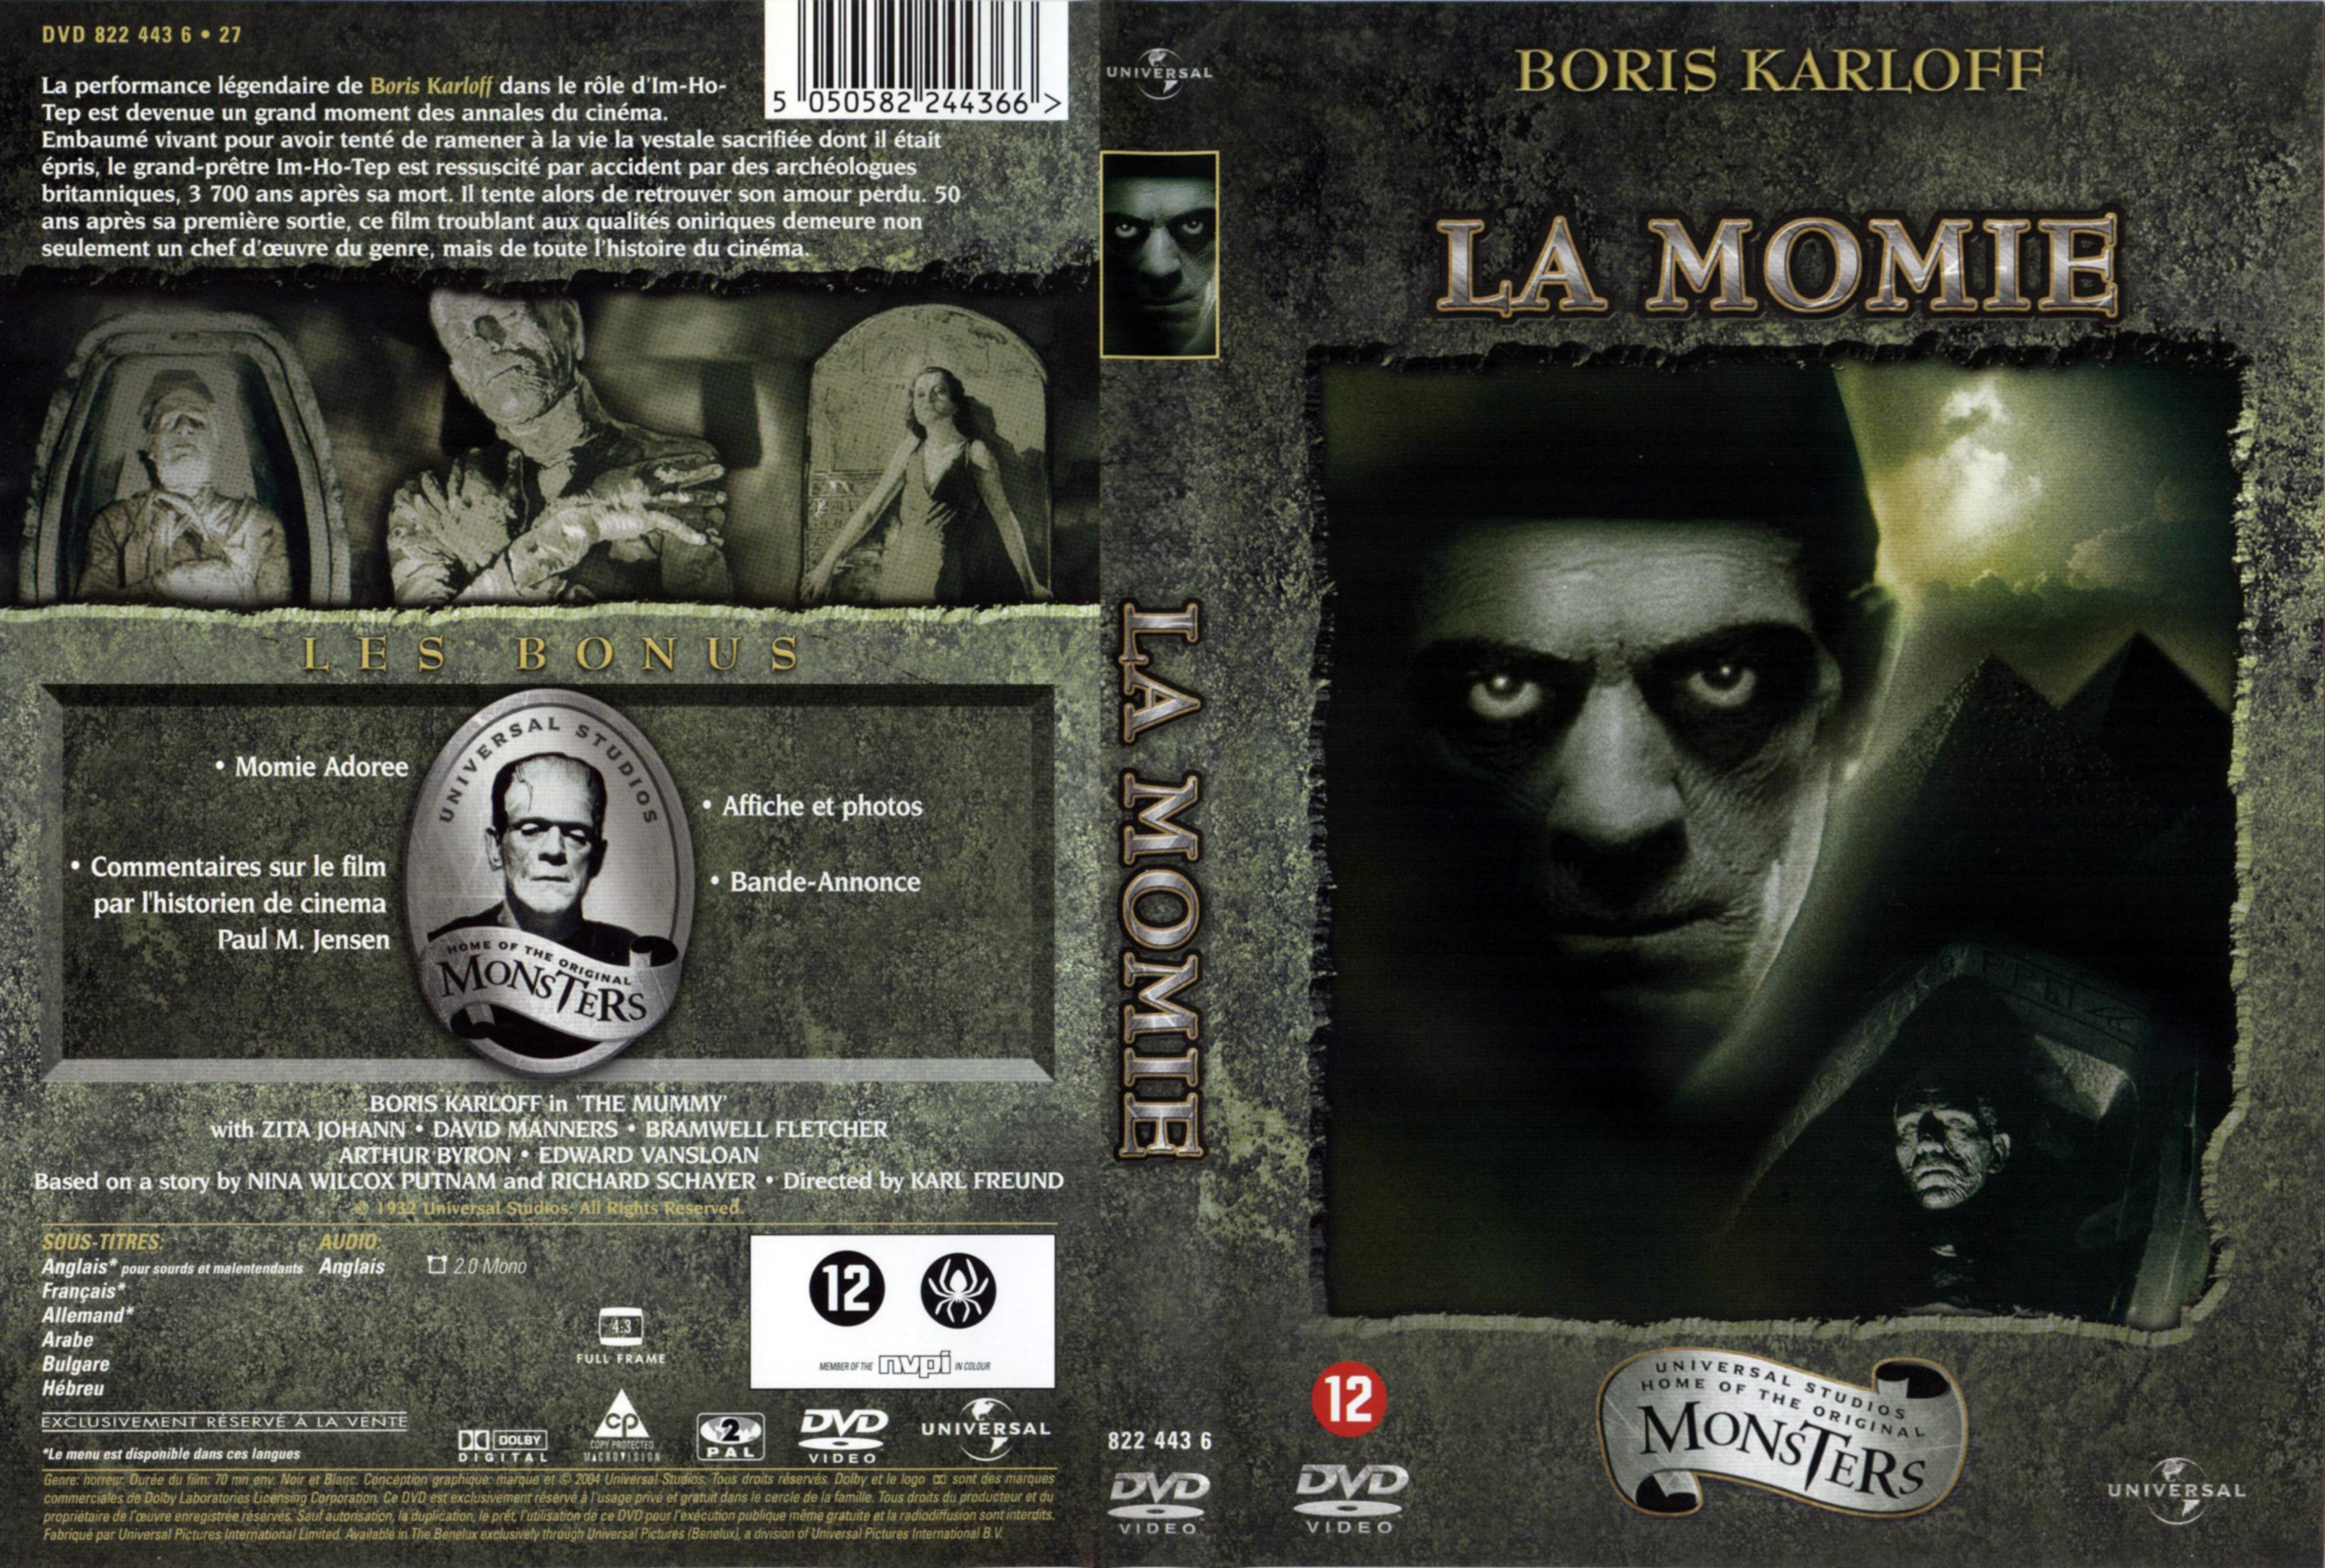 Jaquette DVD La momie (Boris Karloff)